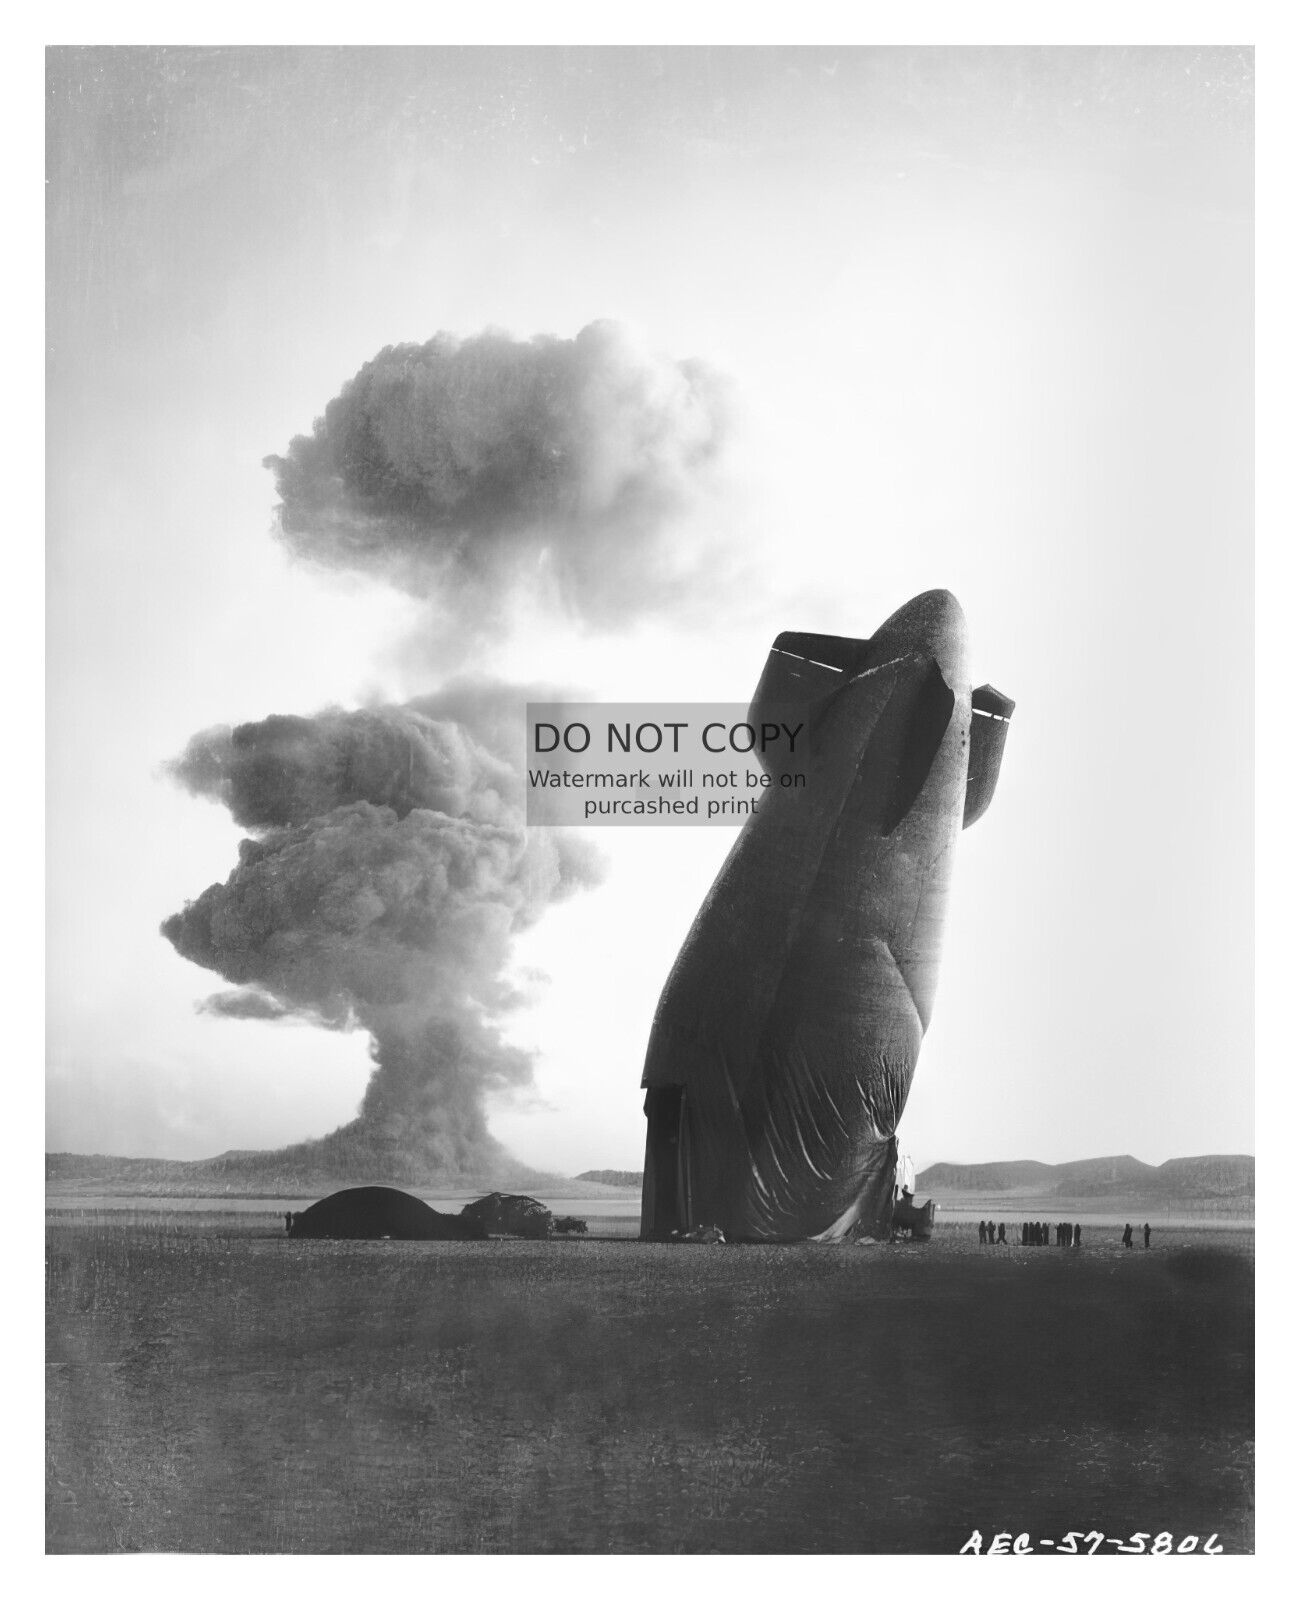 GOODYEAR BLIMP CRASHES AFTER NUCLEAR BOMB TEST MUSHROOM CLOUD 1957 8X10 PHOTO